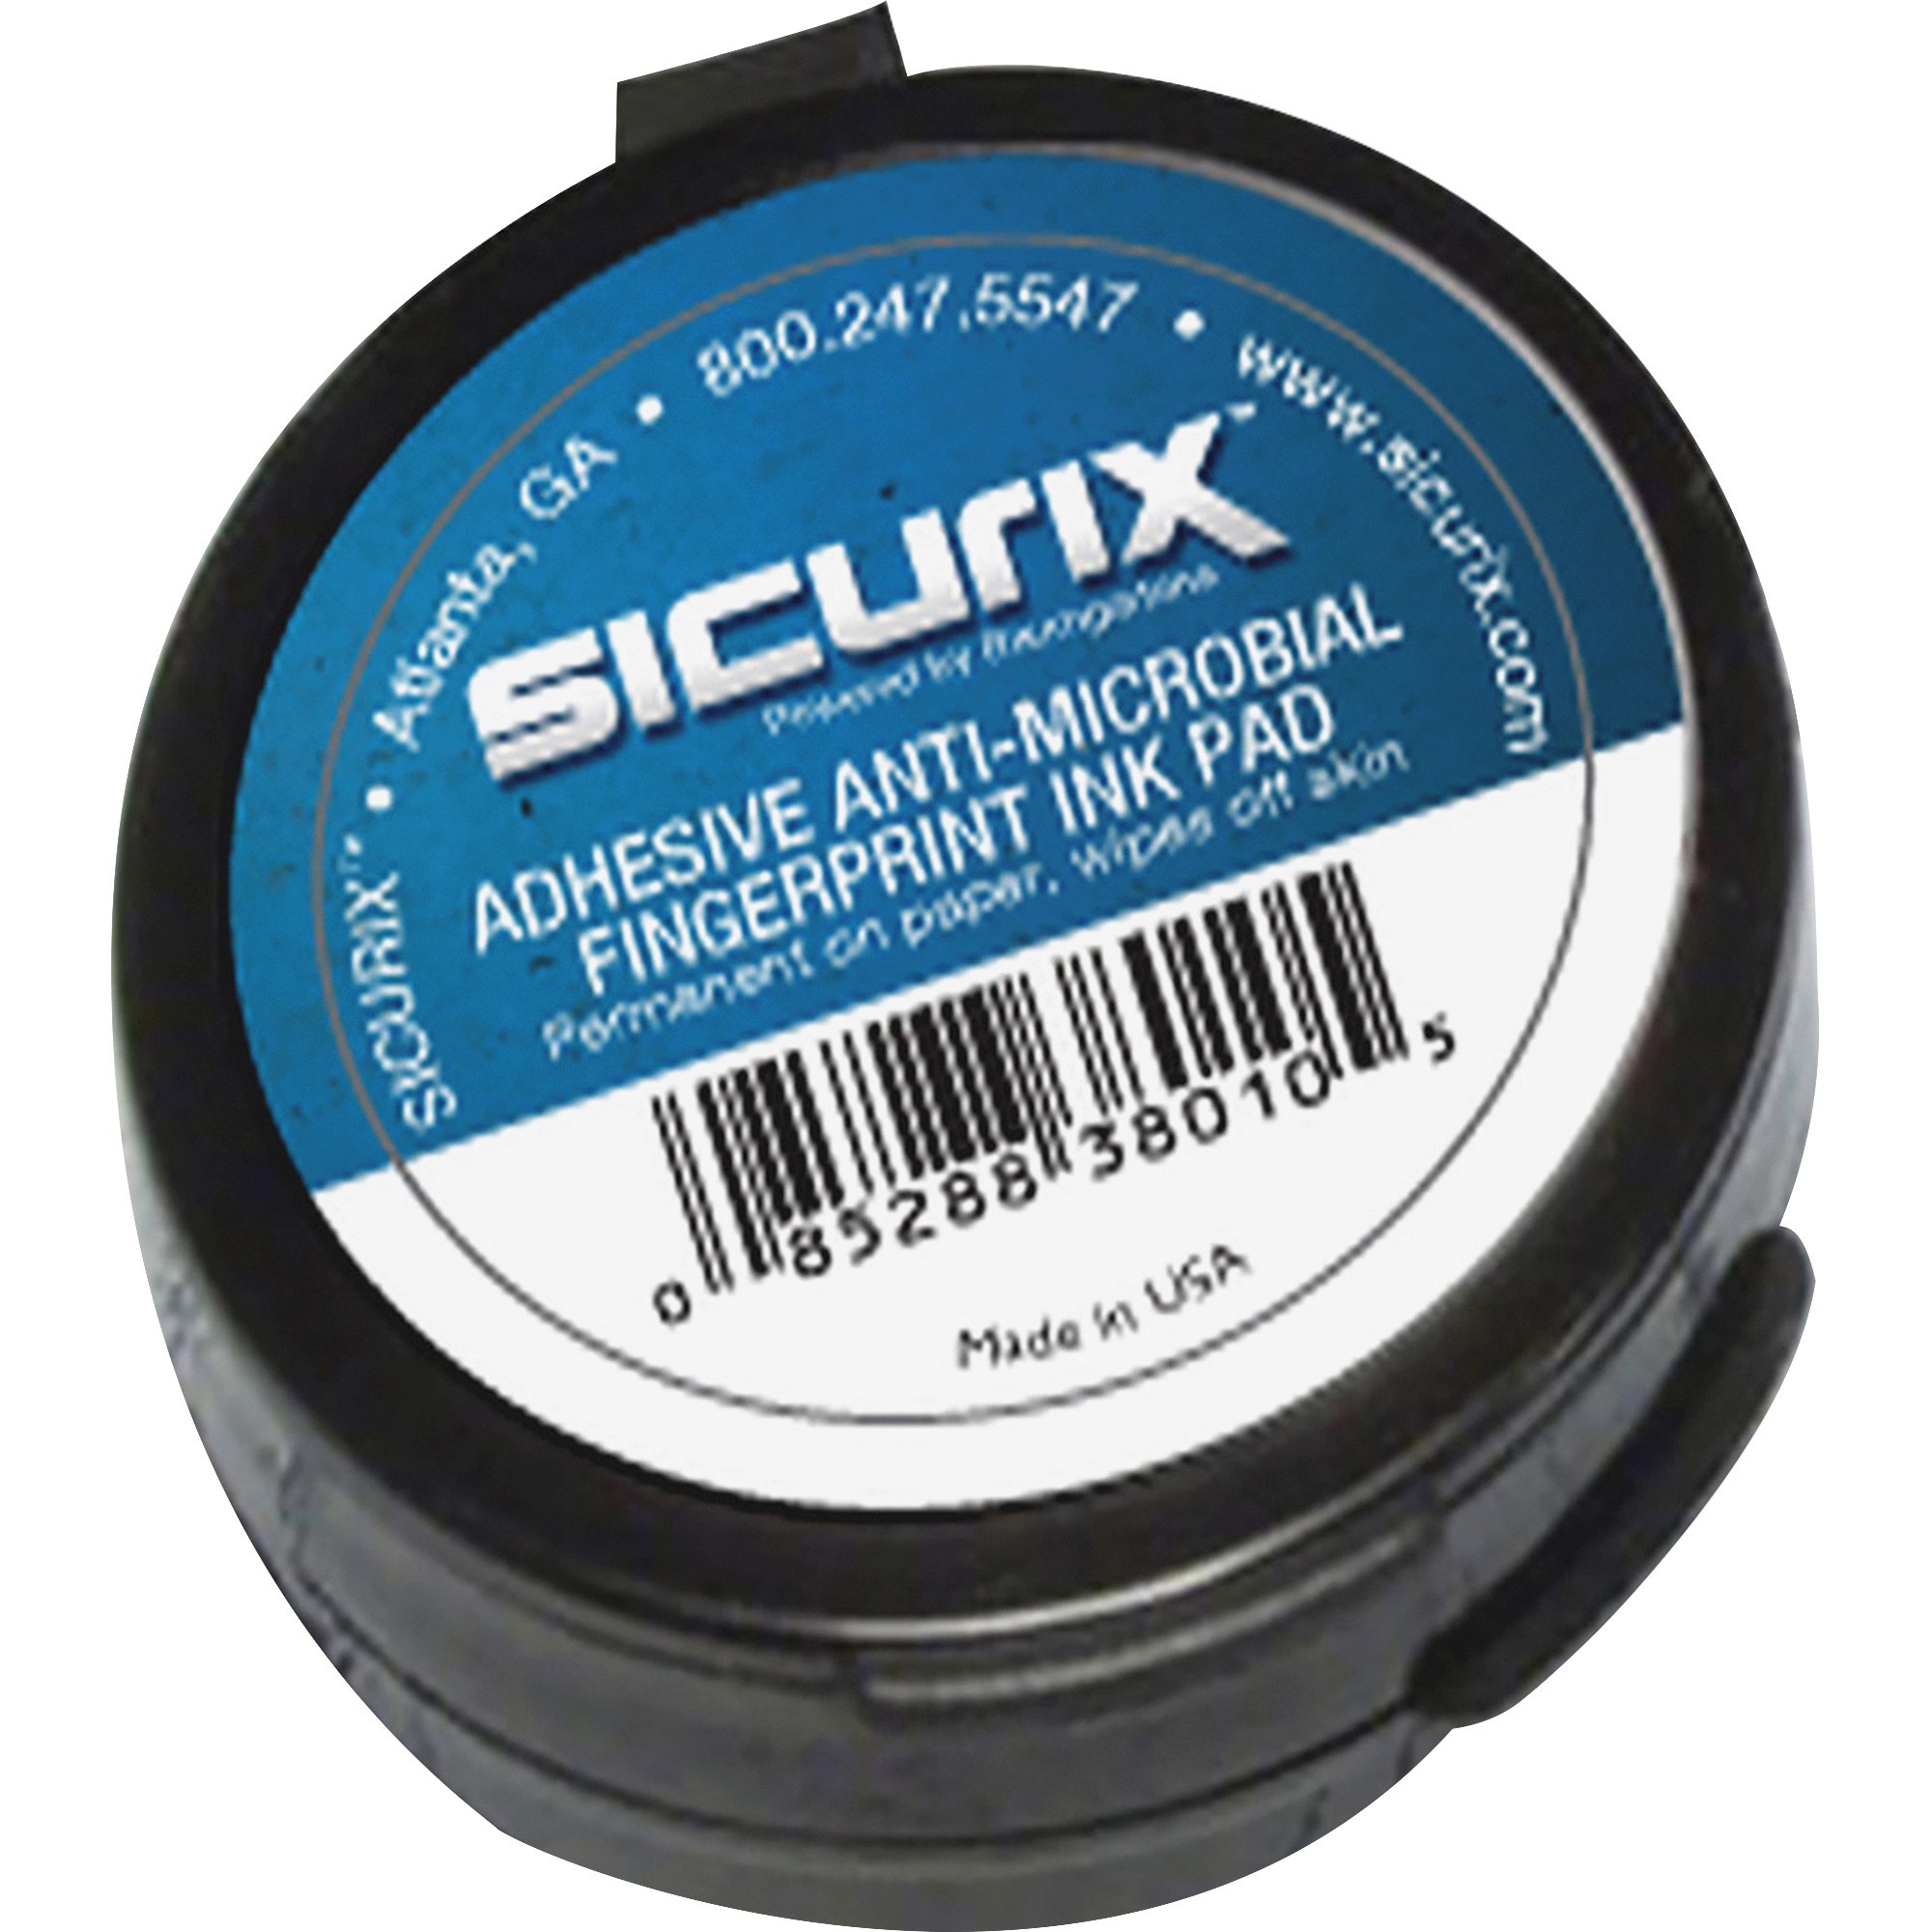 SICURIX Adhesive Fingerprint Ink Pad